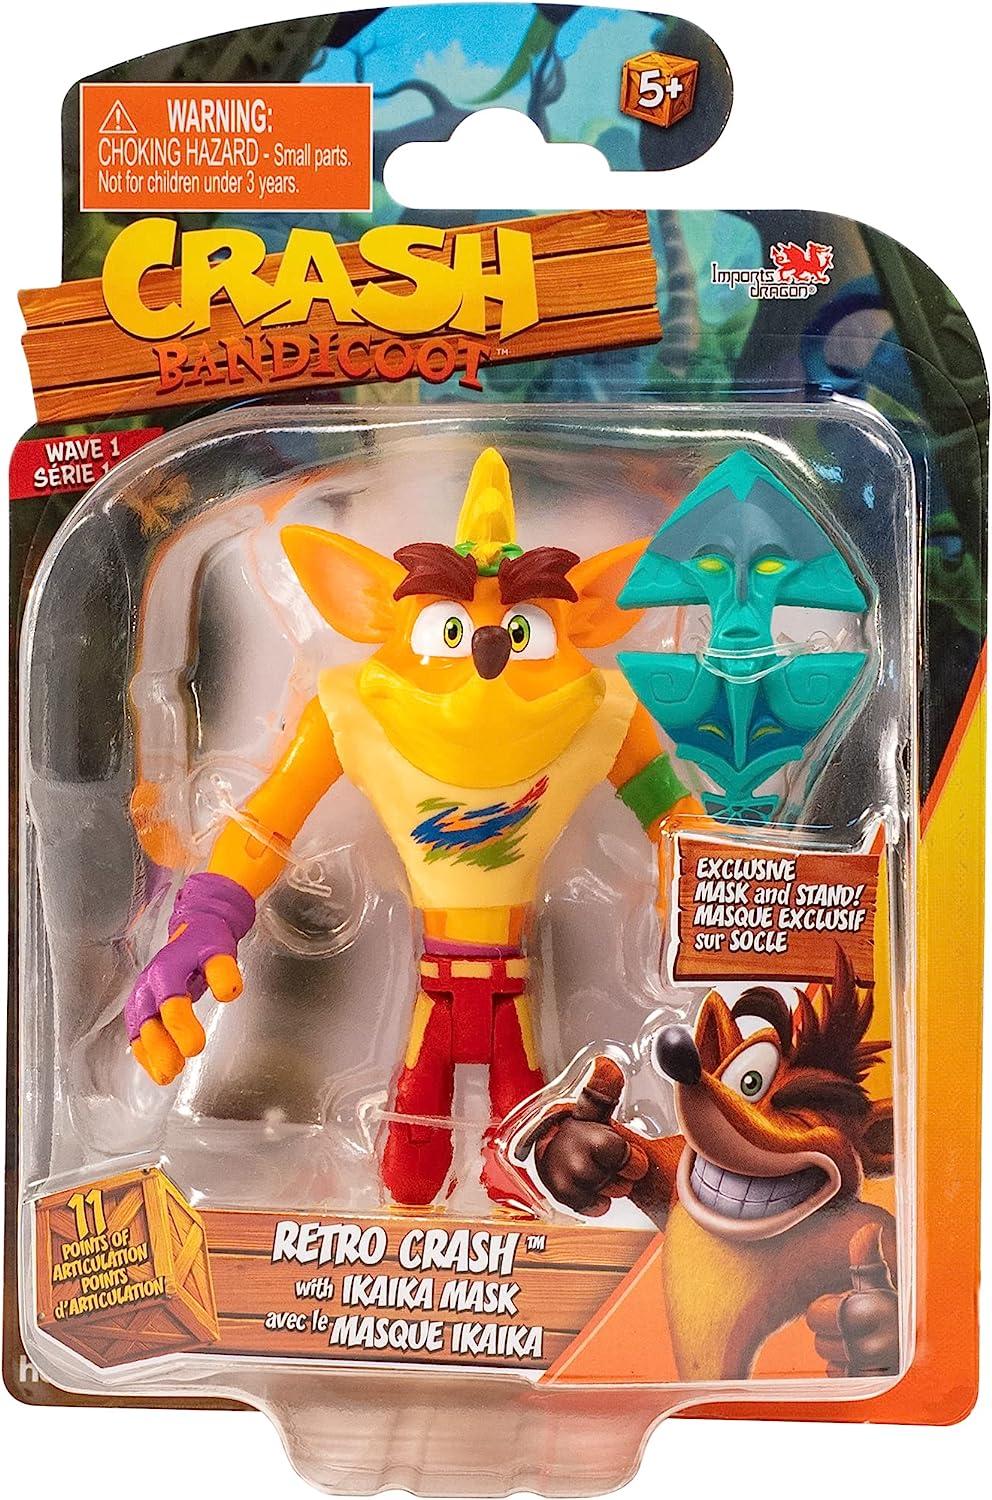 Crash Bandicoot RETRO CRASH WITH IKA IKA MASK Action Figure